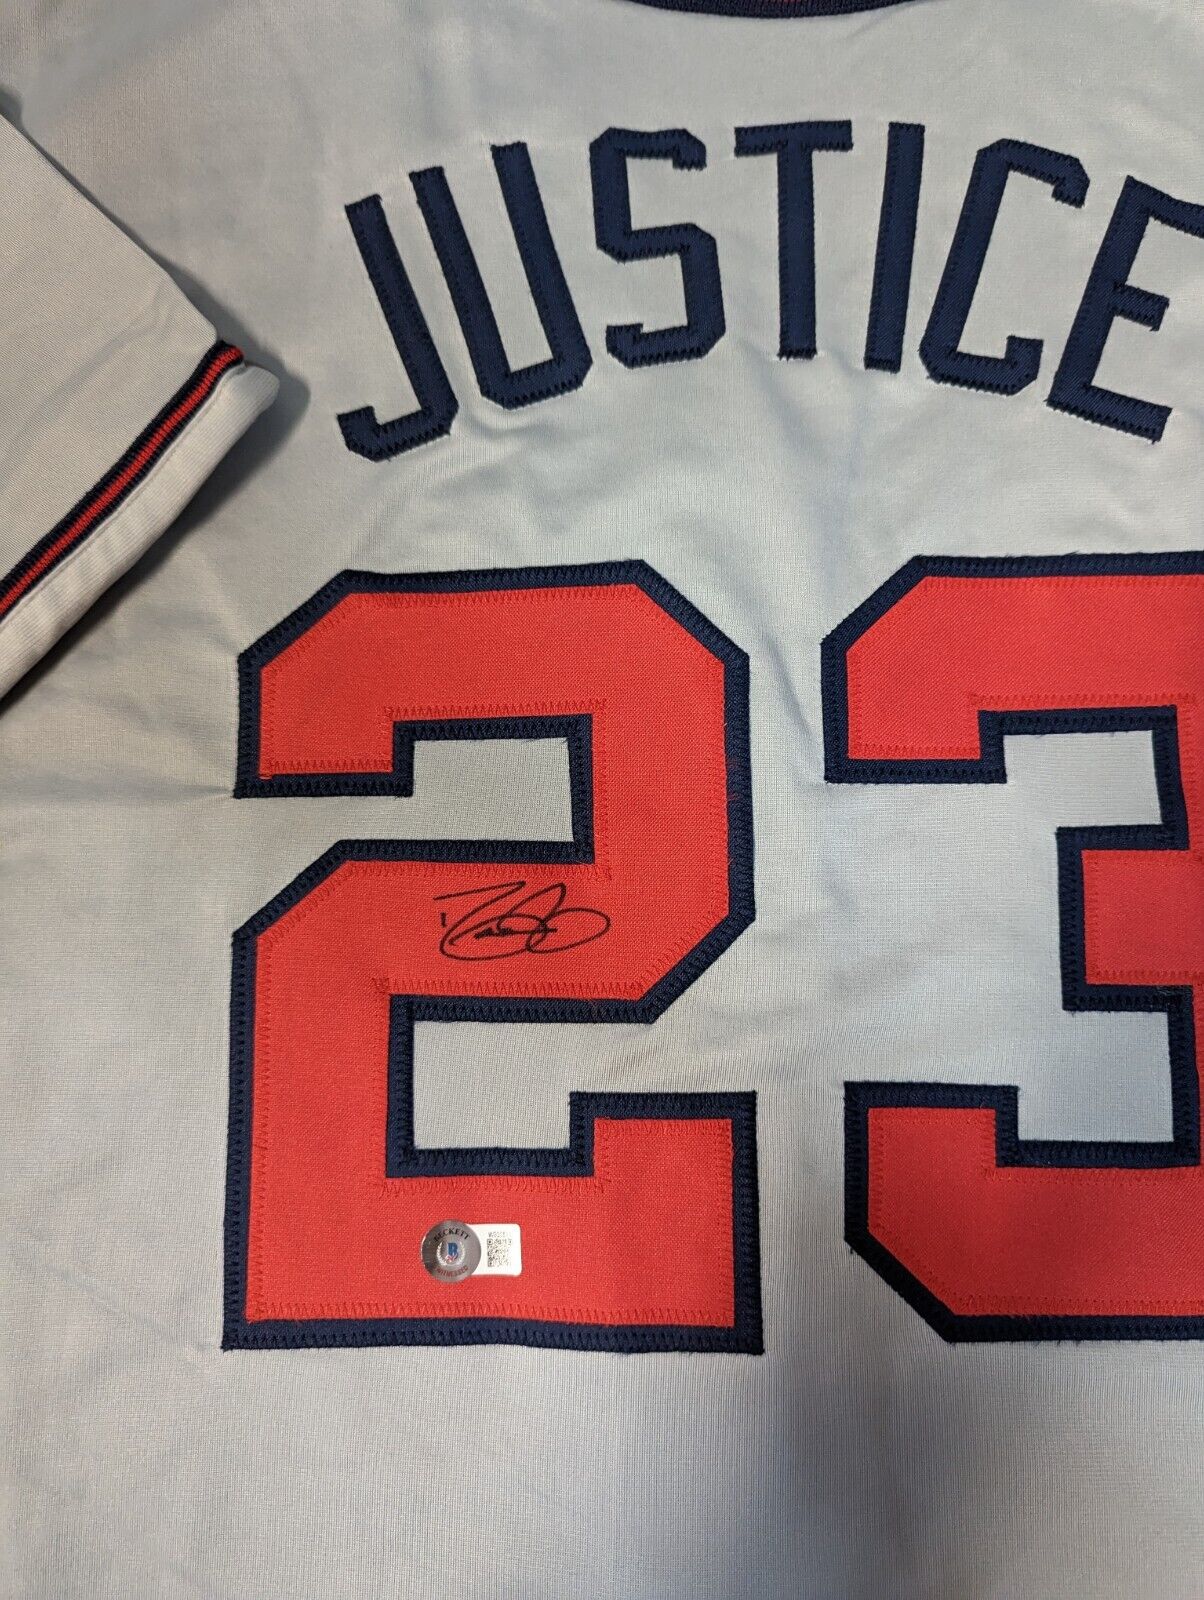 Atlanta Braves David Justice Autographed Signed Jersey Beckett